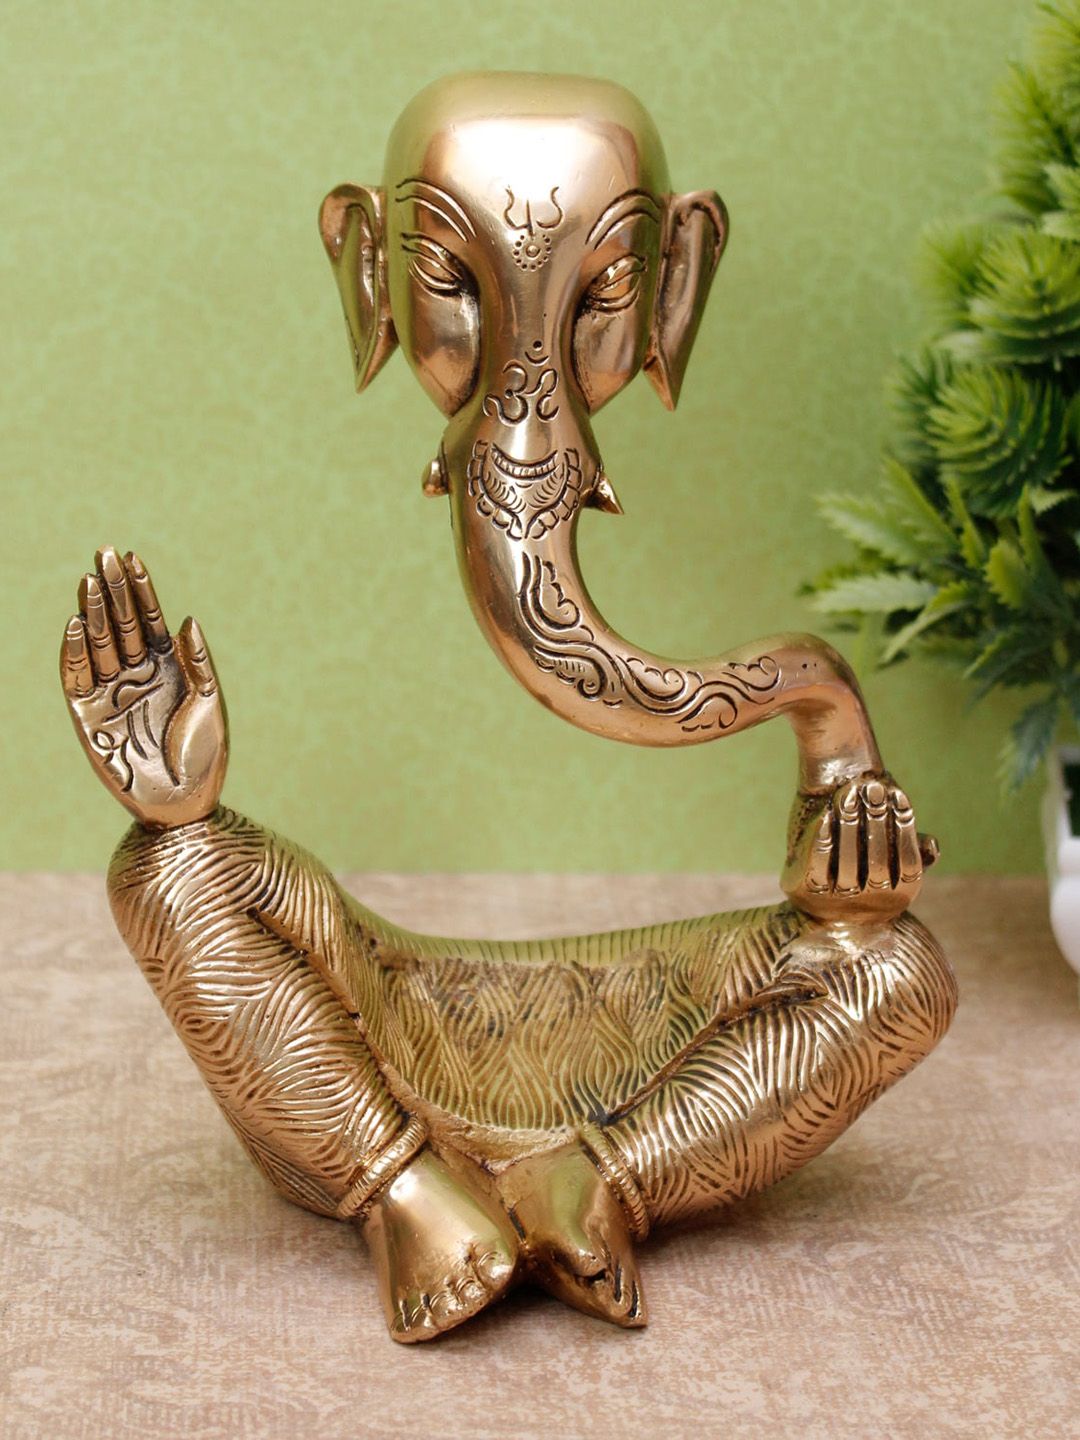 StatueStudio Gold-Toned Ganesha Statue Idol Showpiece Price in India